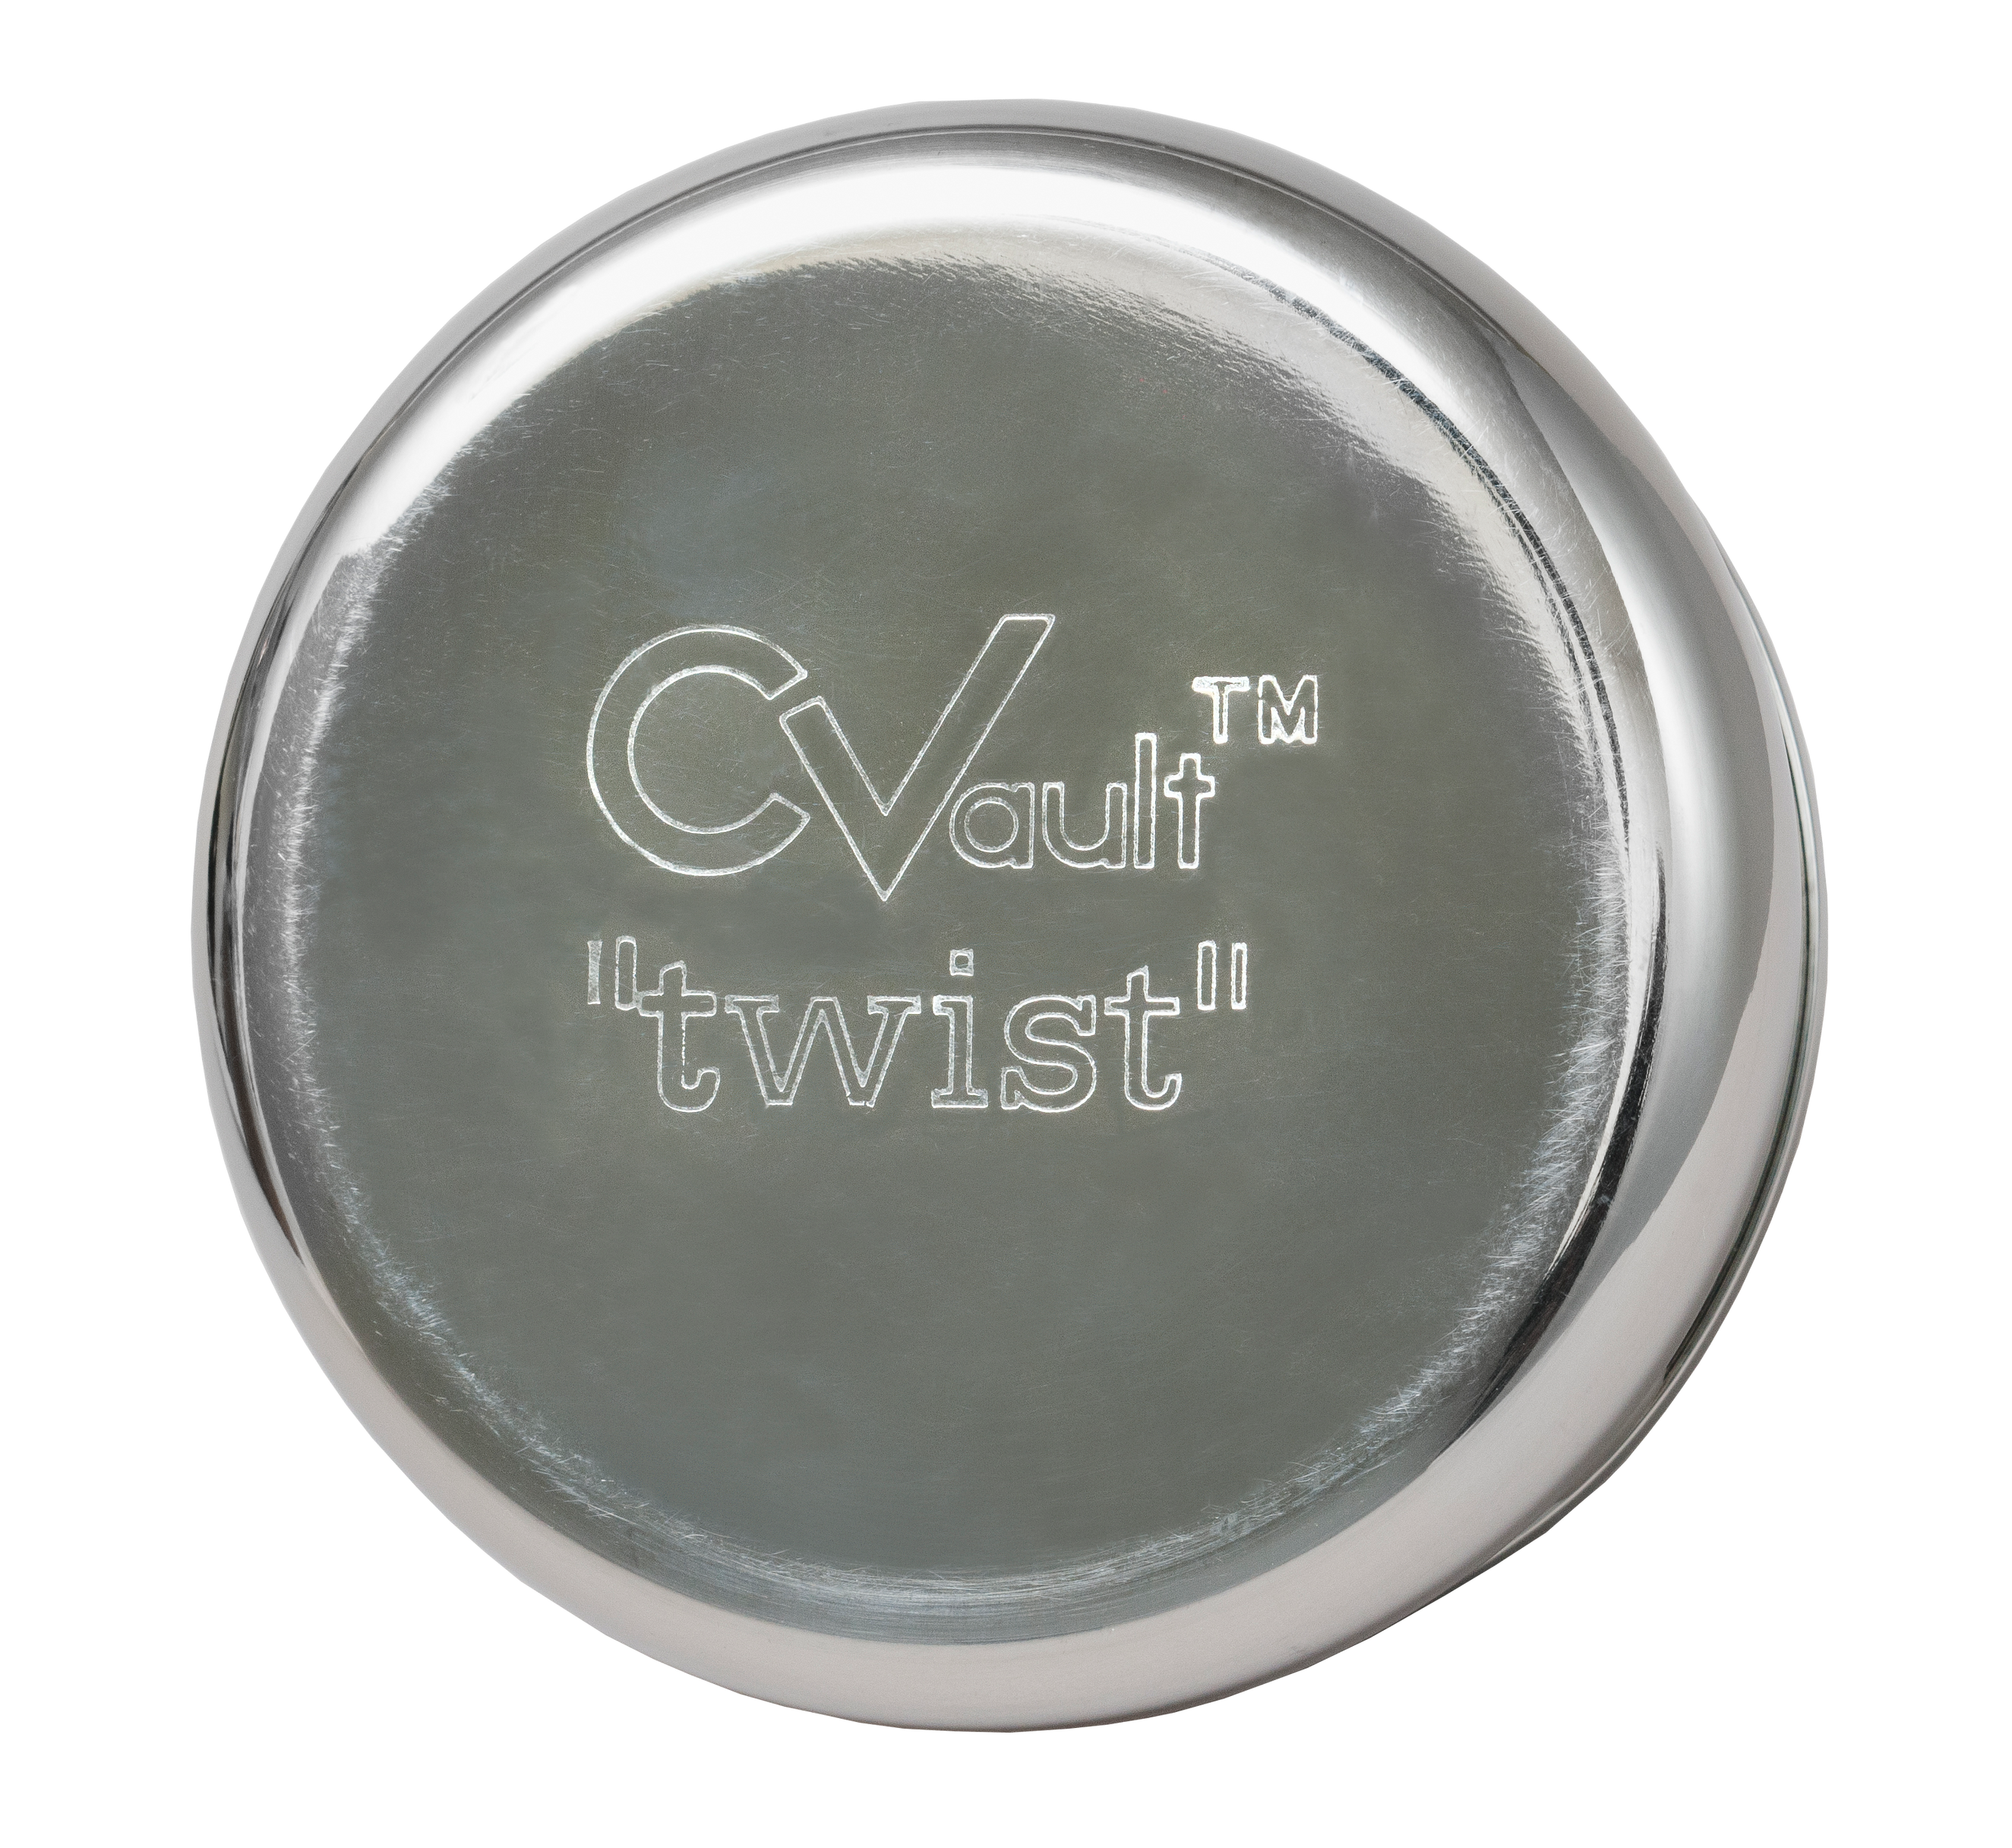 CVault Twist Storage Container Small Bottom with Cvault Twist Logo